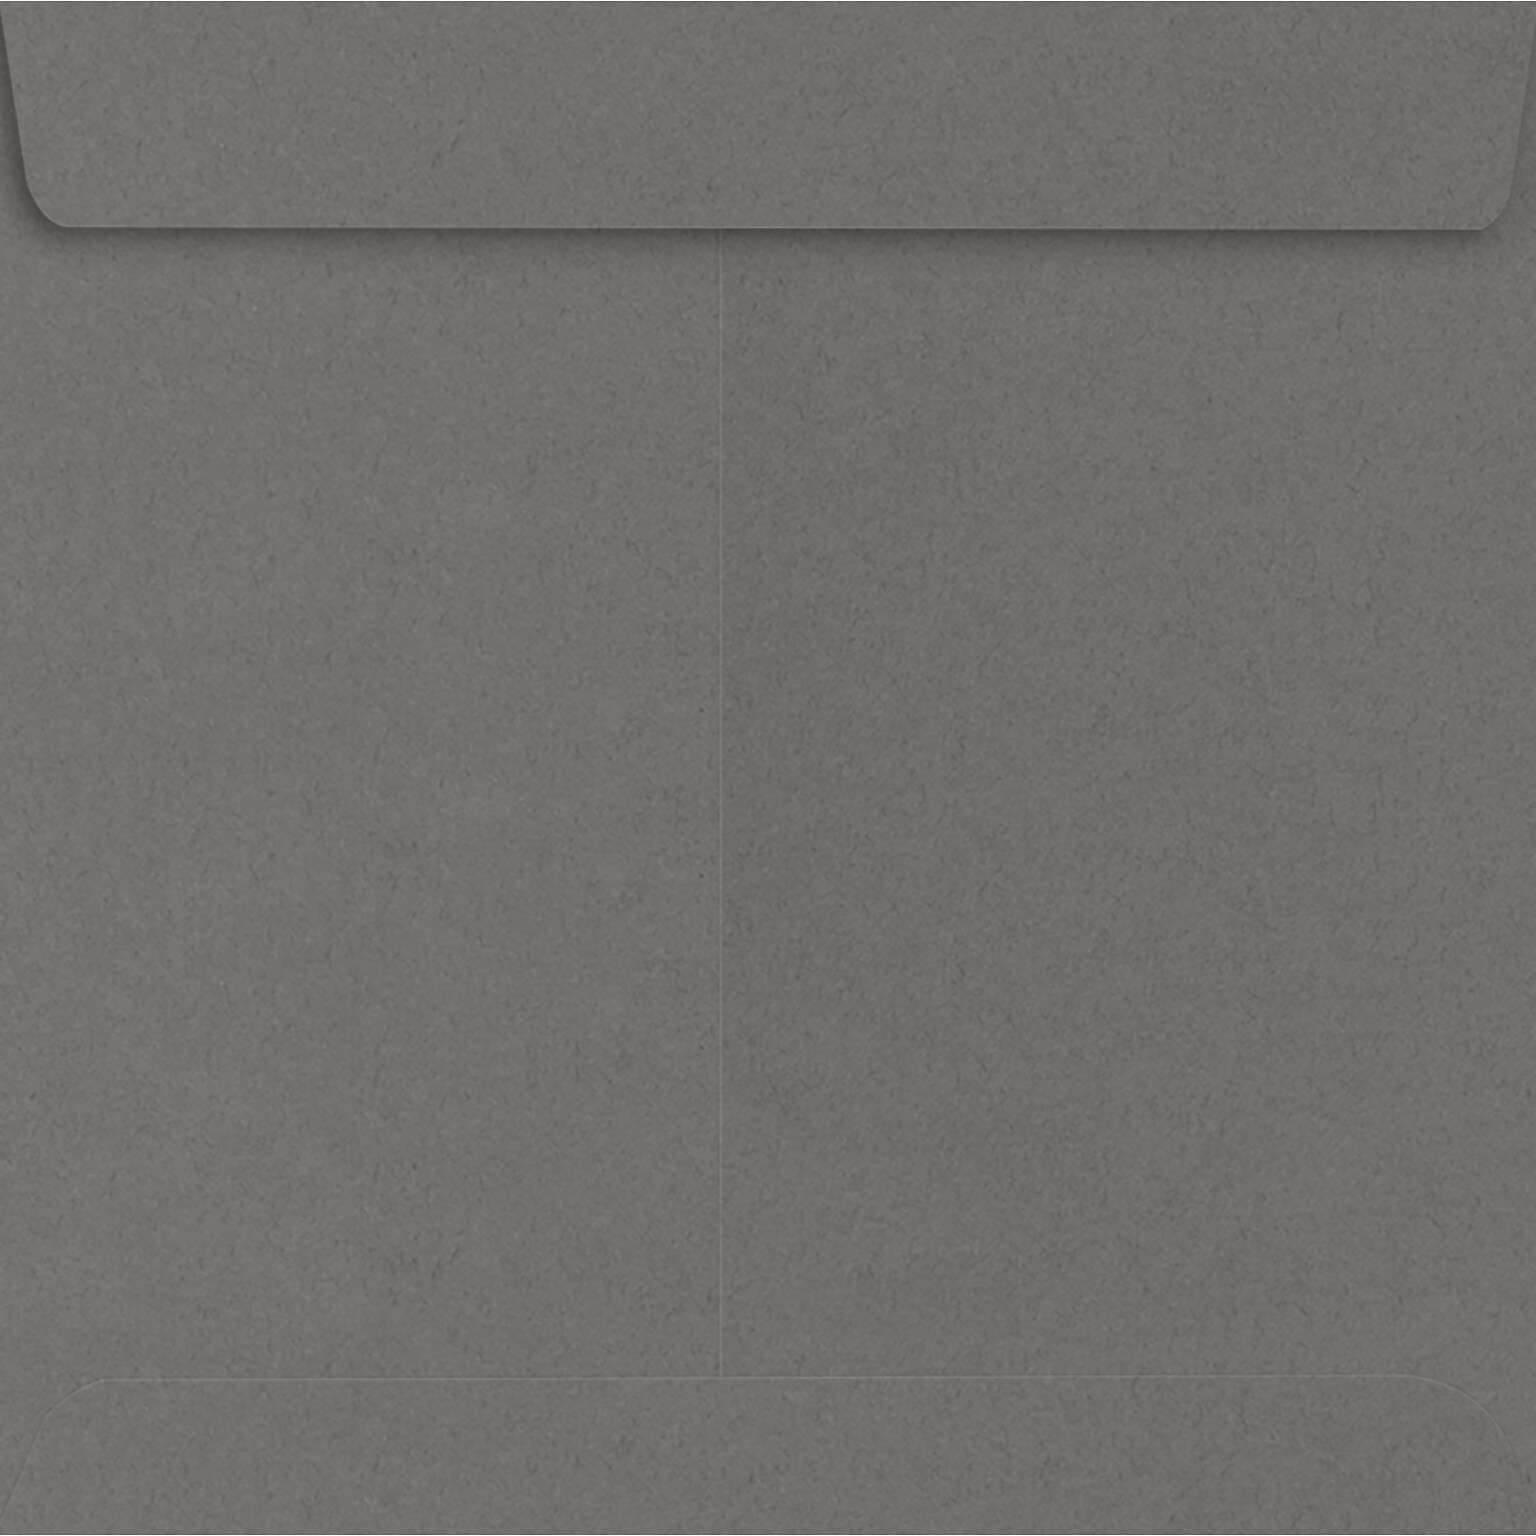 JAM Paper 7 1/2 x 7 1/2 Square Envelopes ,Smoke, 500 Pack, Gray (EX8555-22-500)